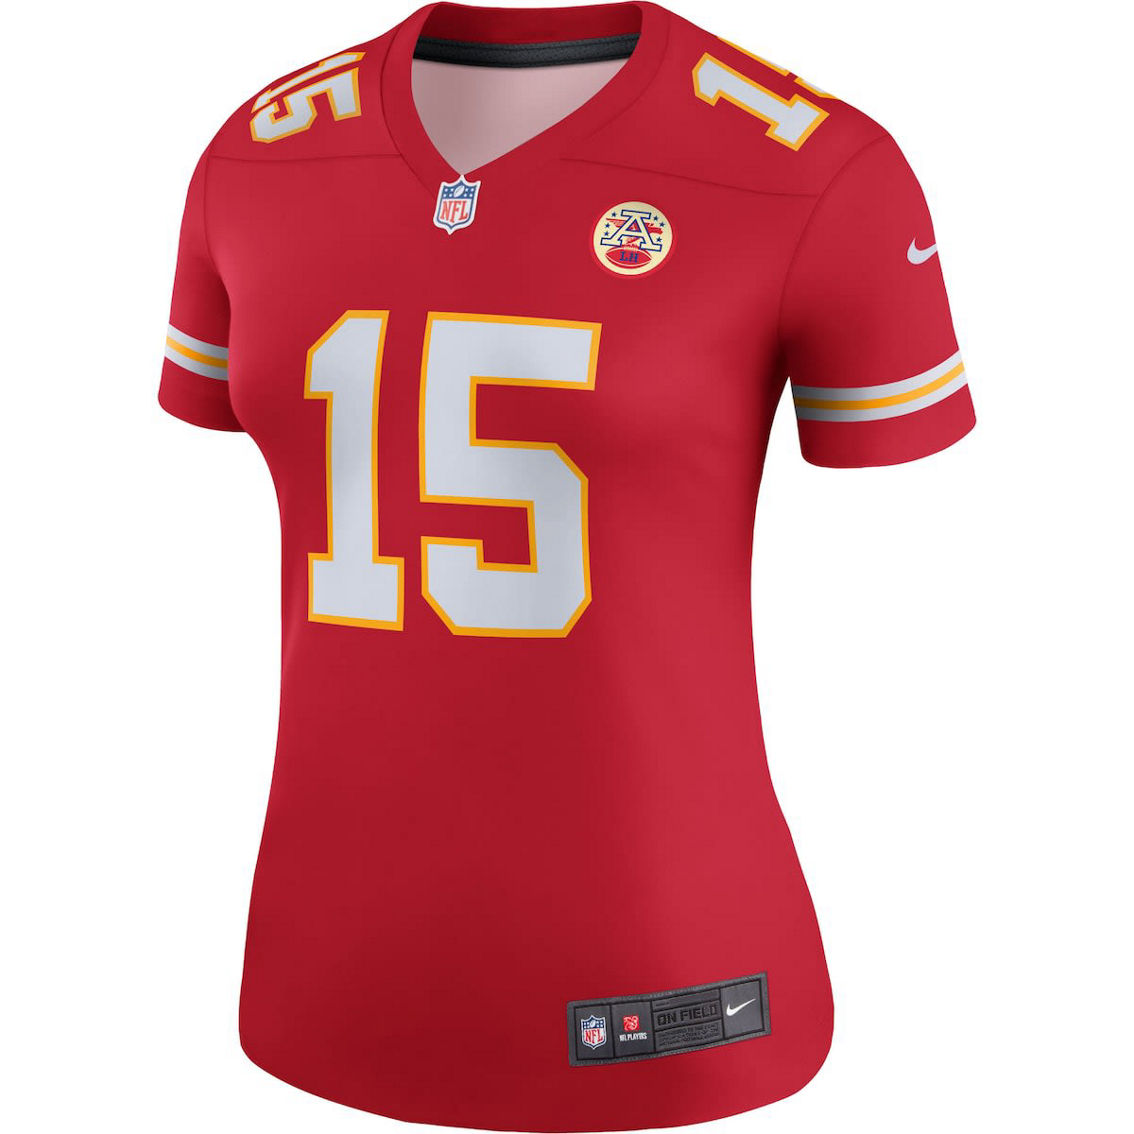 Nike Women's Patrick Mahomes Red Kansas City Chiefs Legend Team Jersey - Image 3 of 4